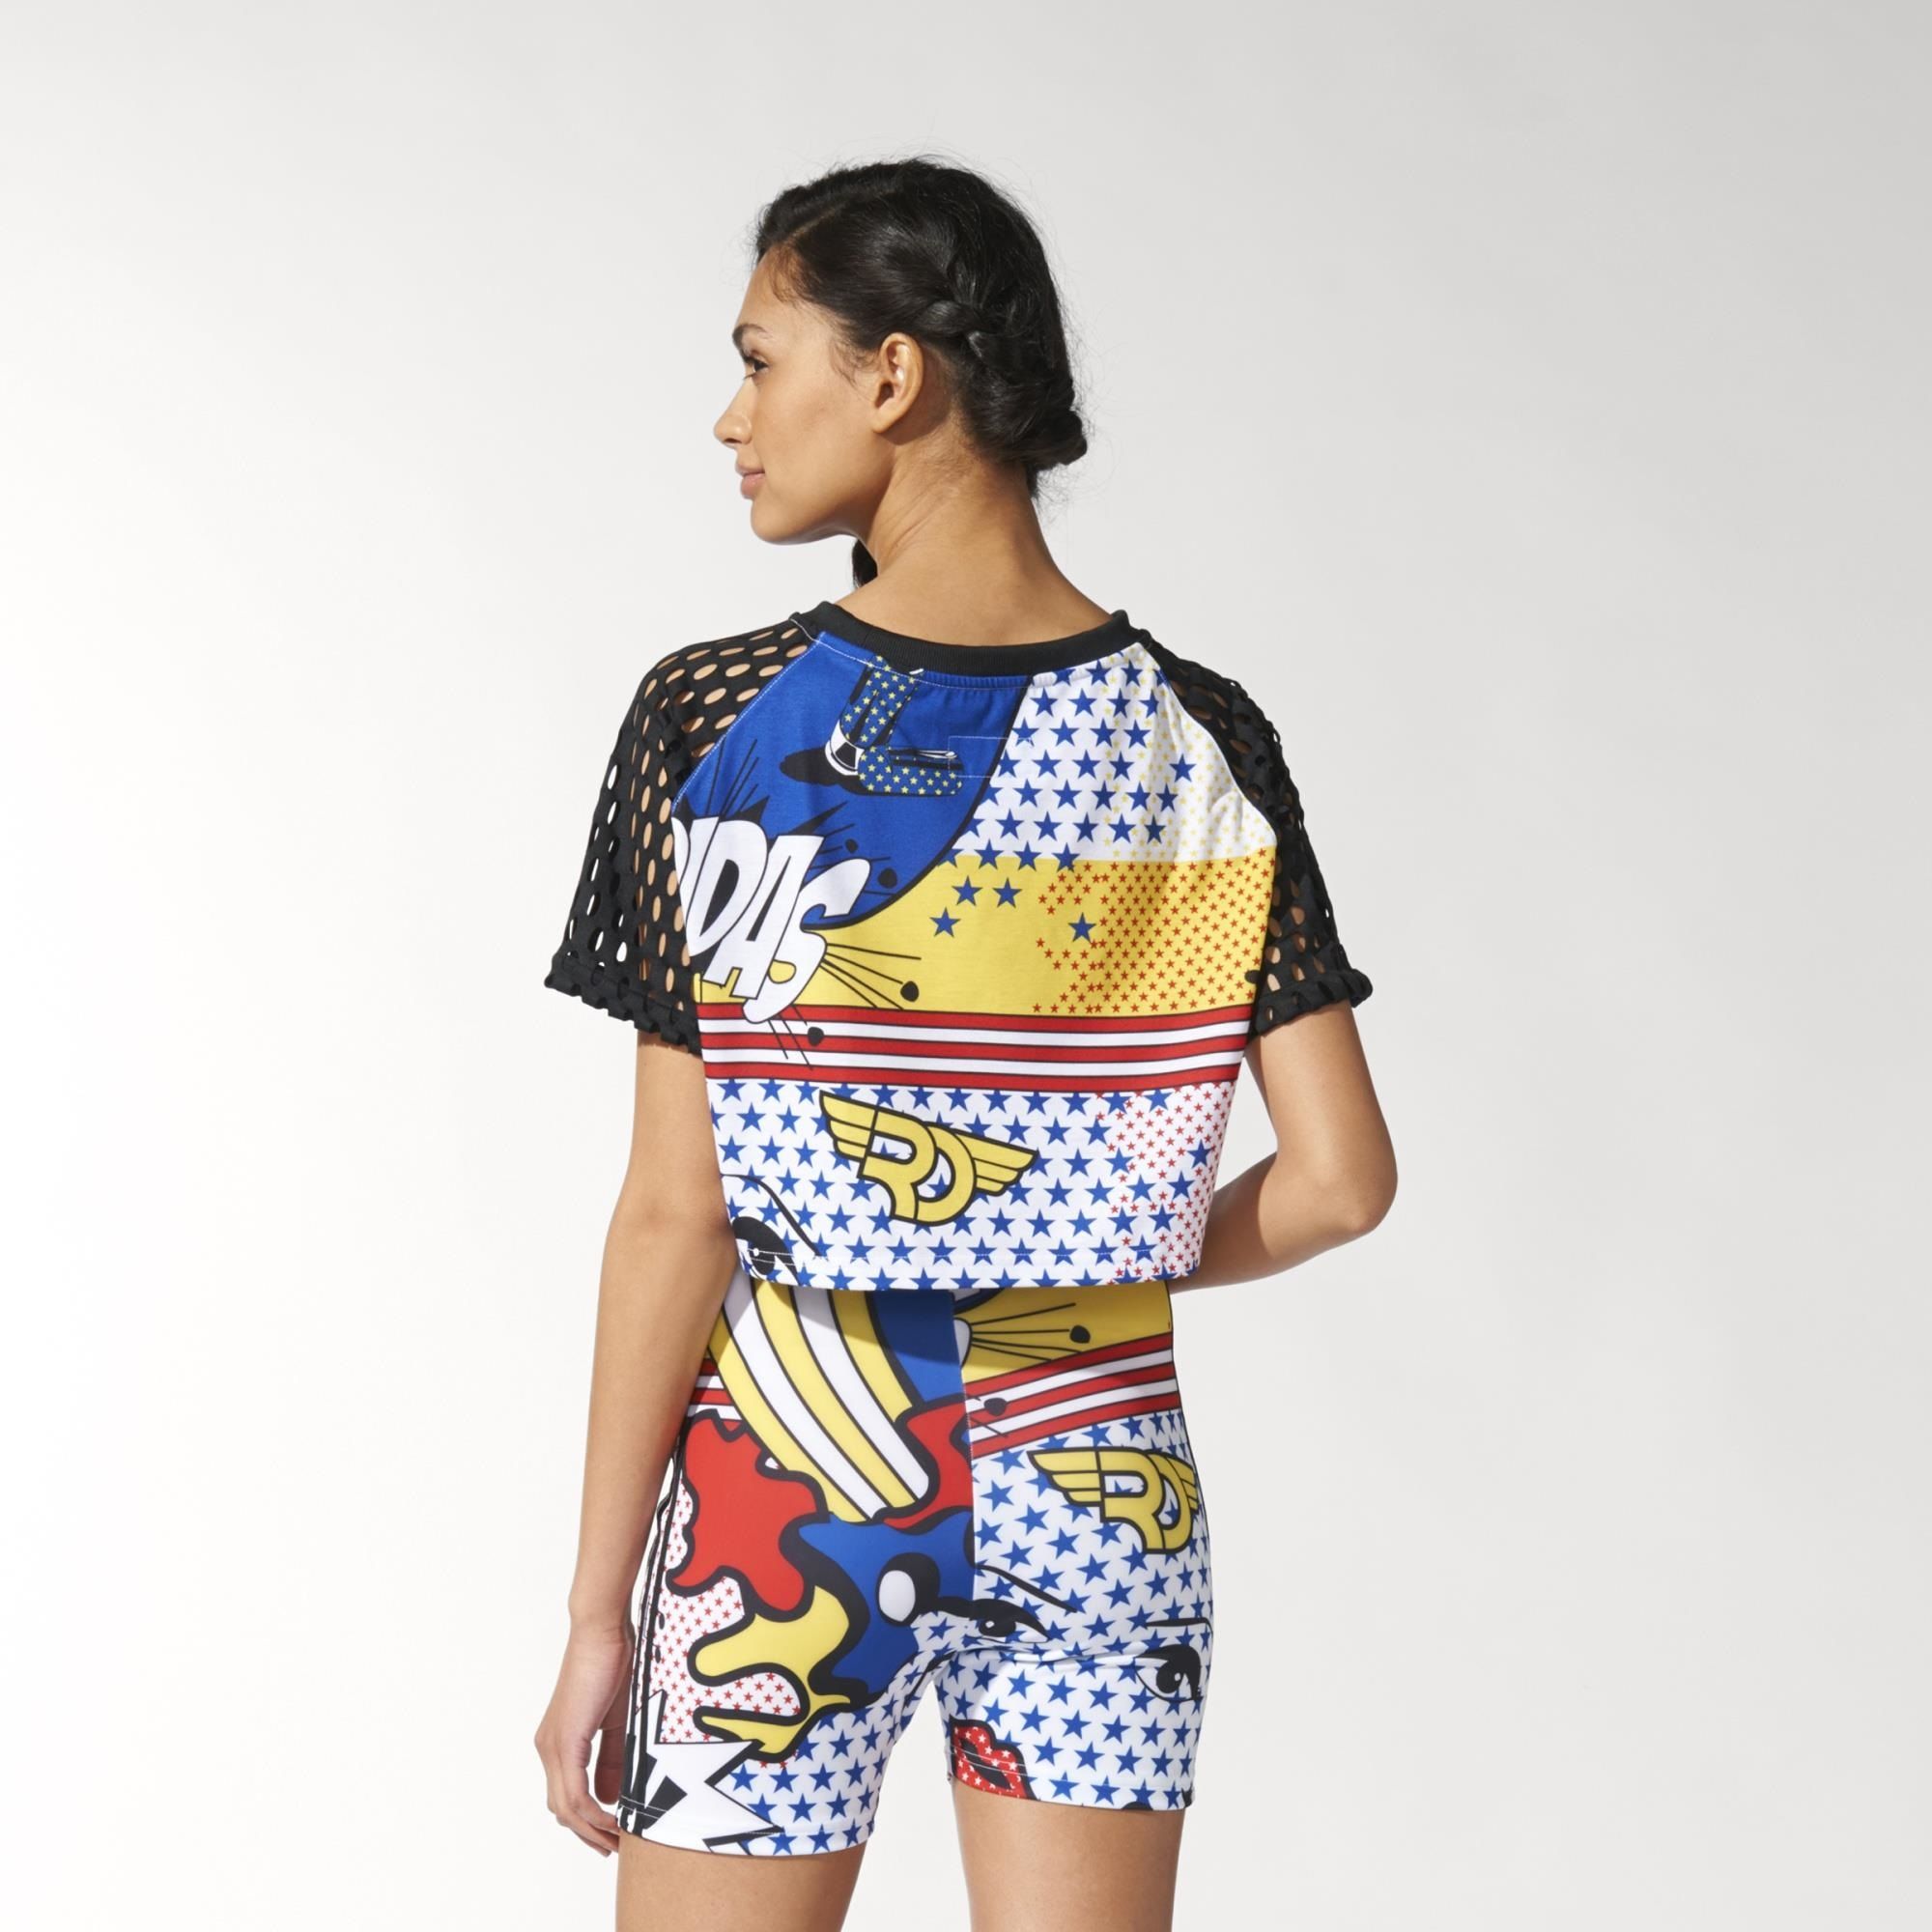 Aanbeveling huiselijk Onderhandelen Adidas Original Camiseta Mujer Super Crop Rita Ora (multicolor)